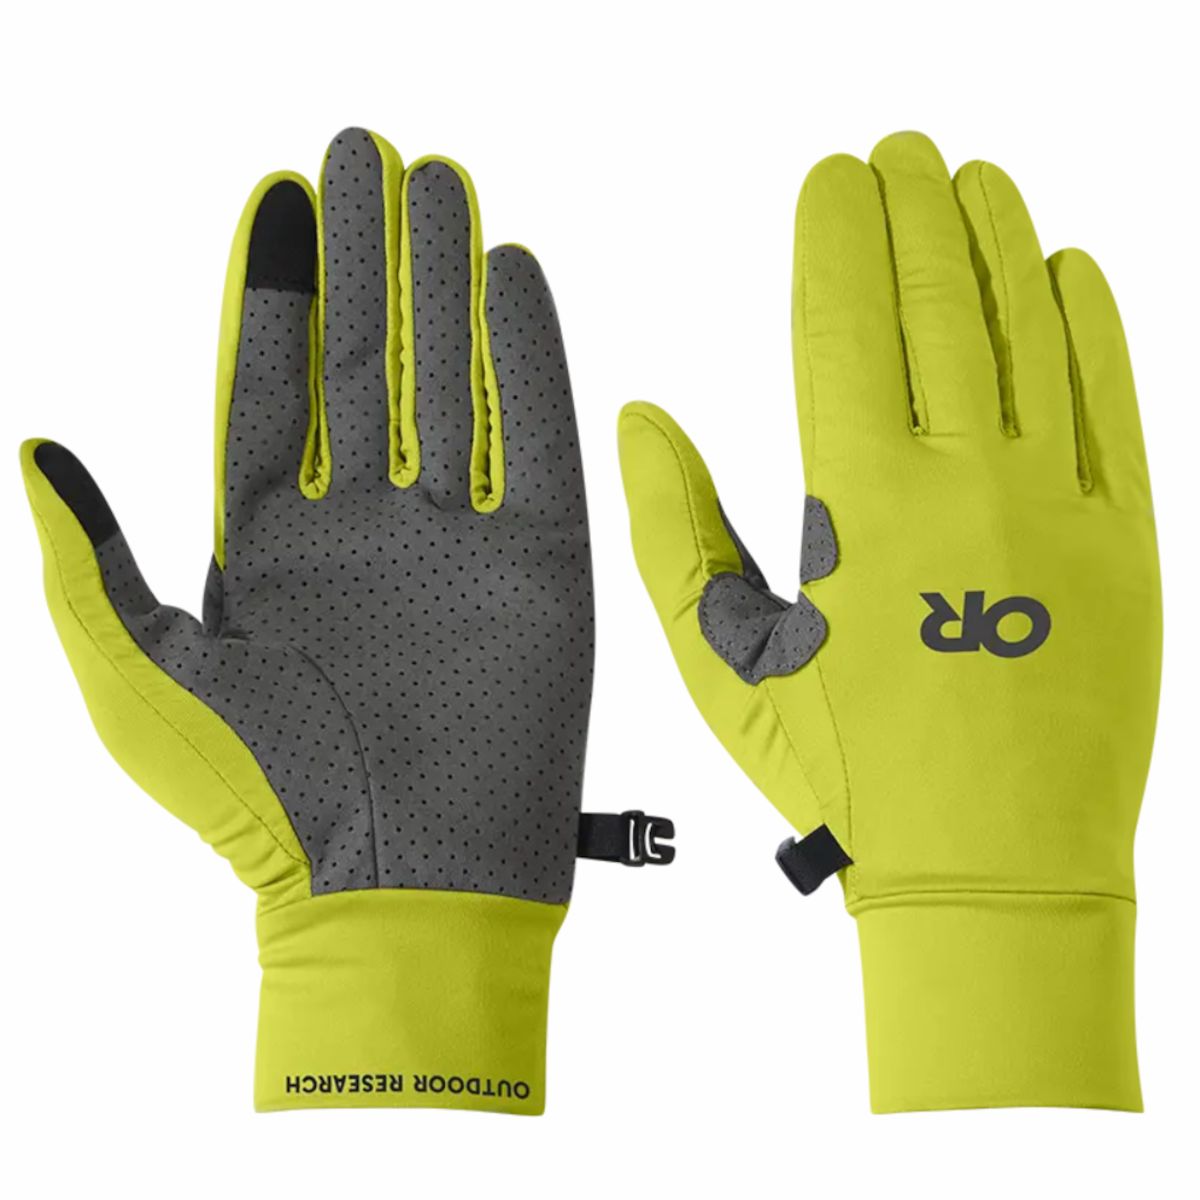 ActiveIce Chroma Full Sun Gloves (Spring 2021)